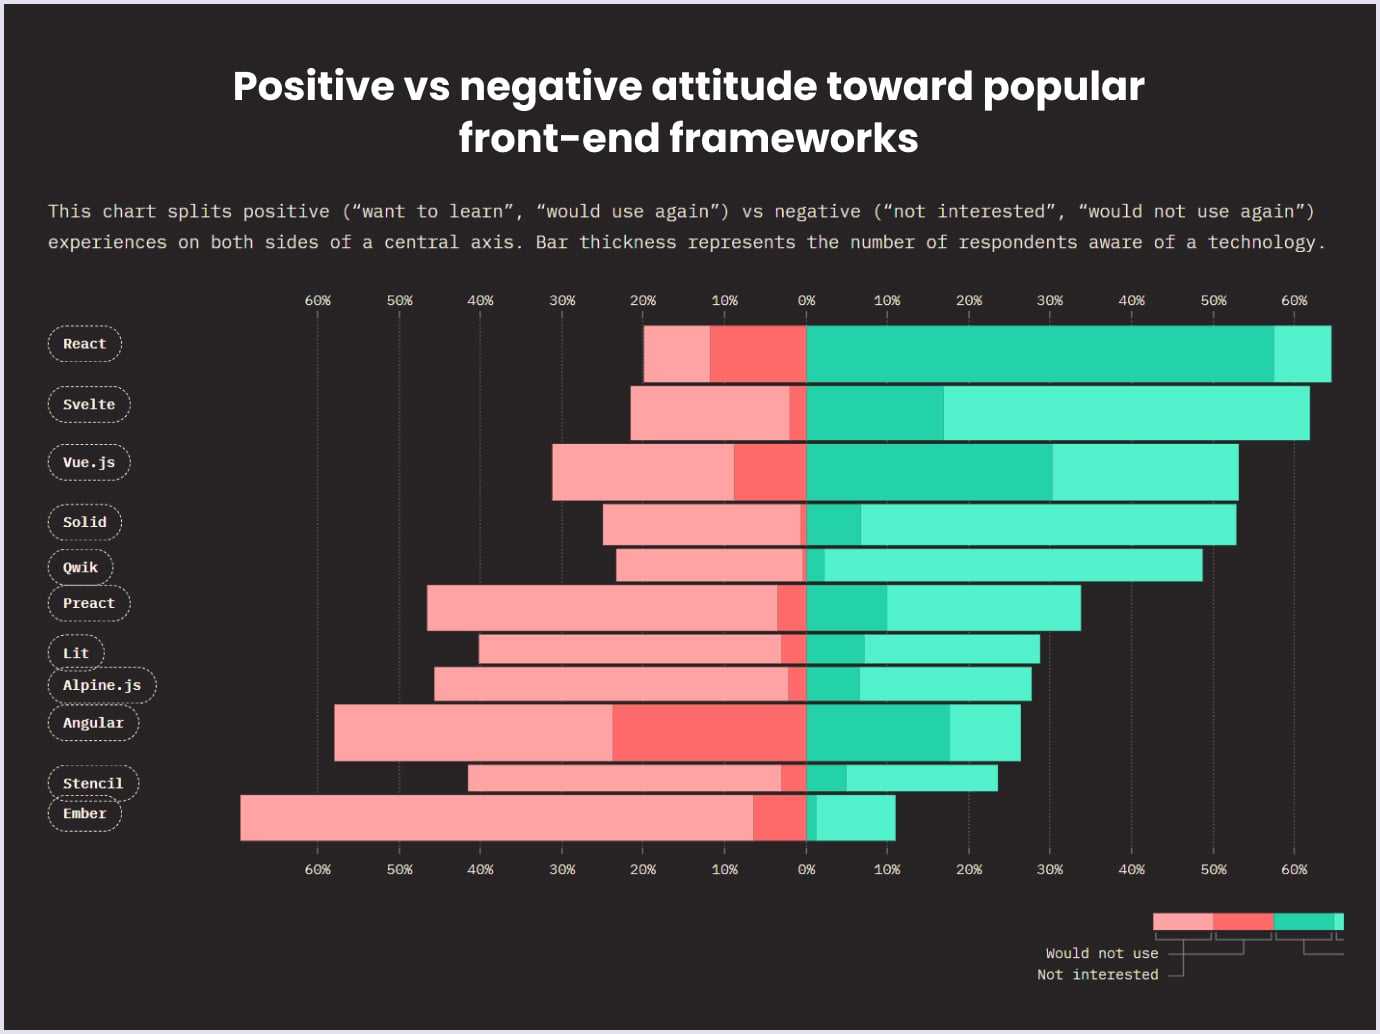 Positive attitude toward popular front-end frameworks